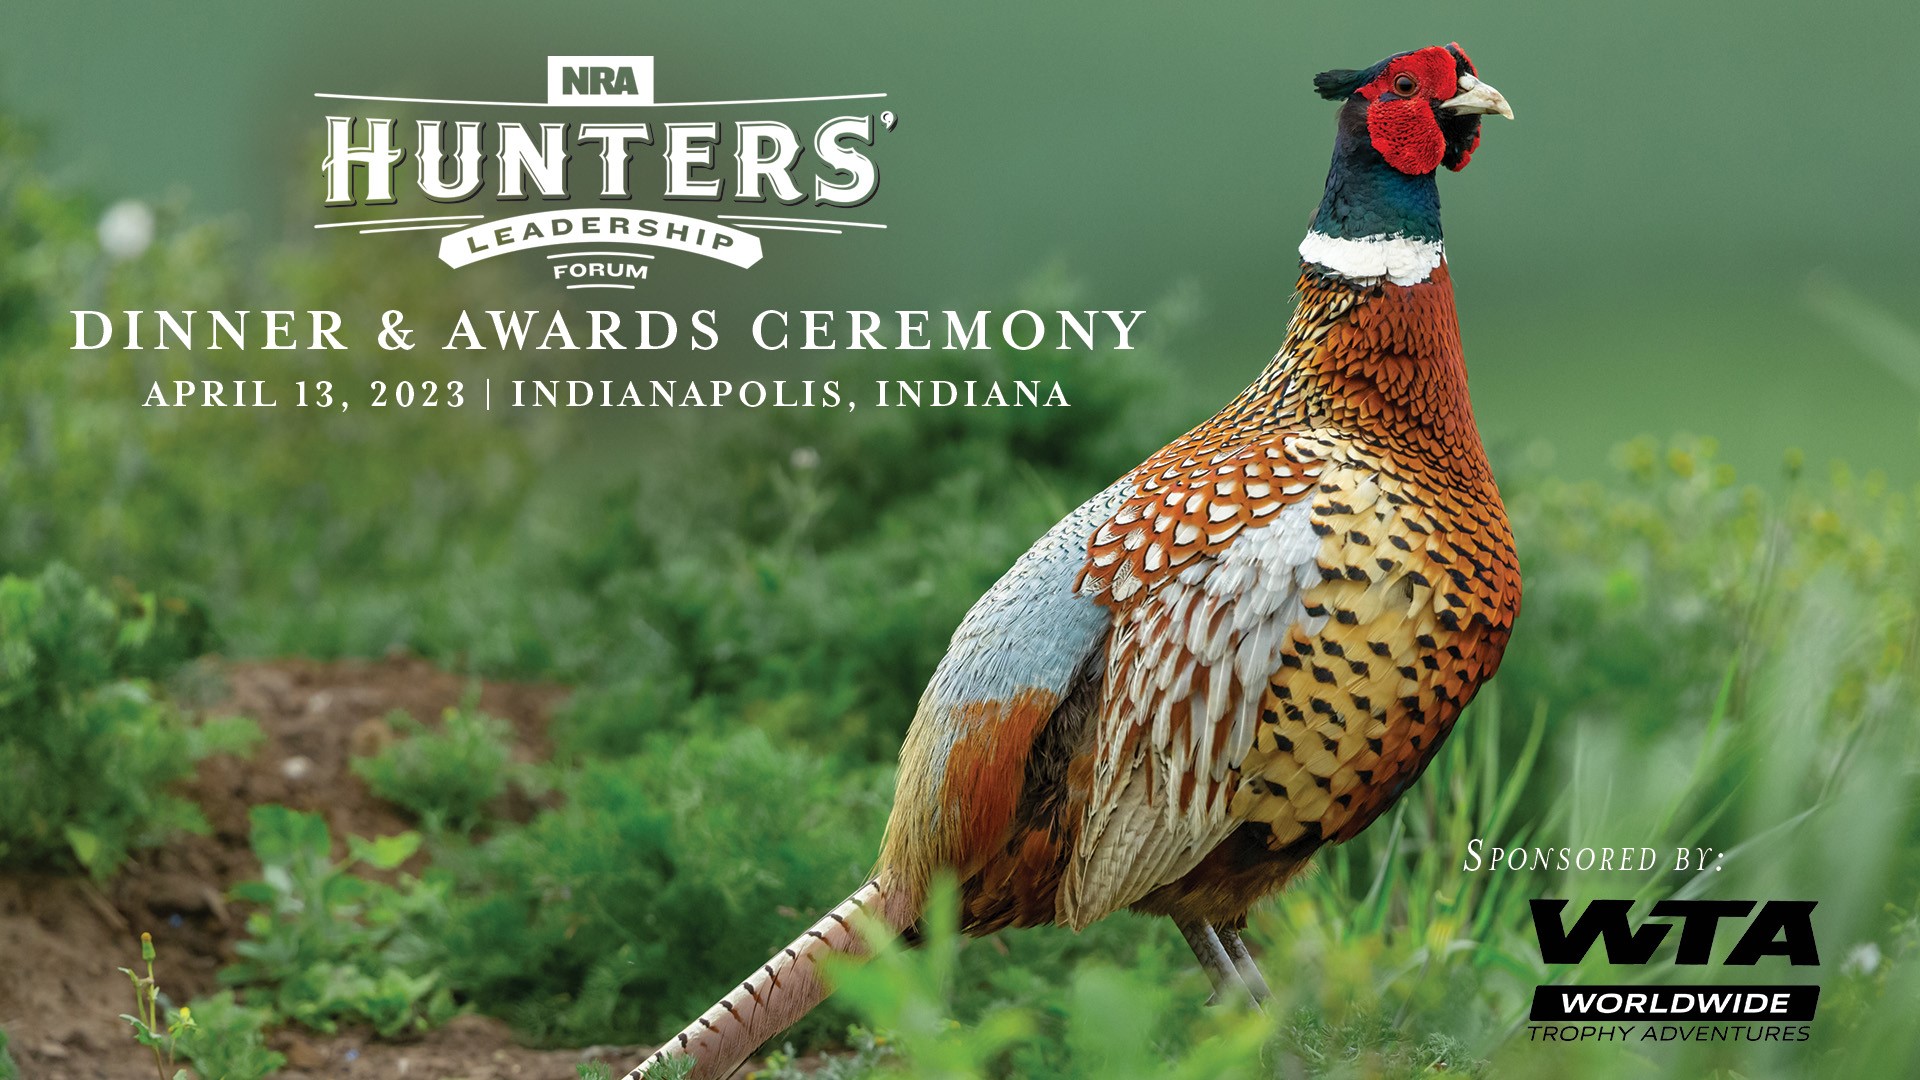 NRA Hunters' Leadership Forum Dinner & Awards Ceremony